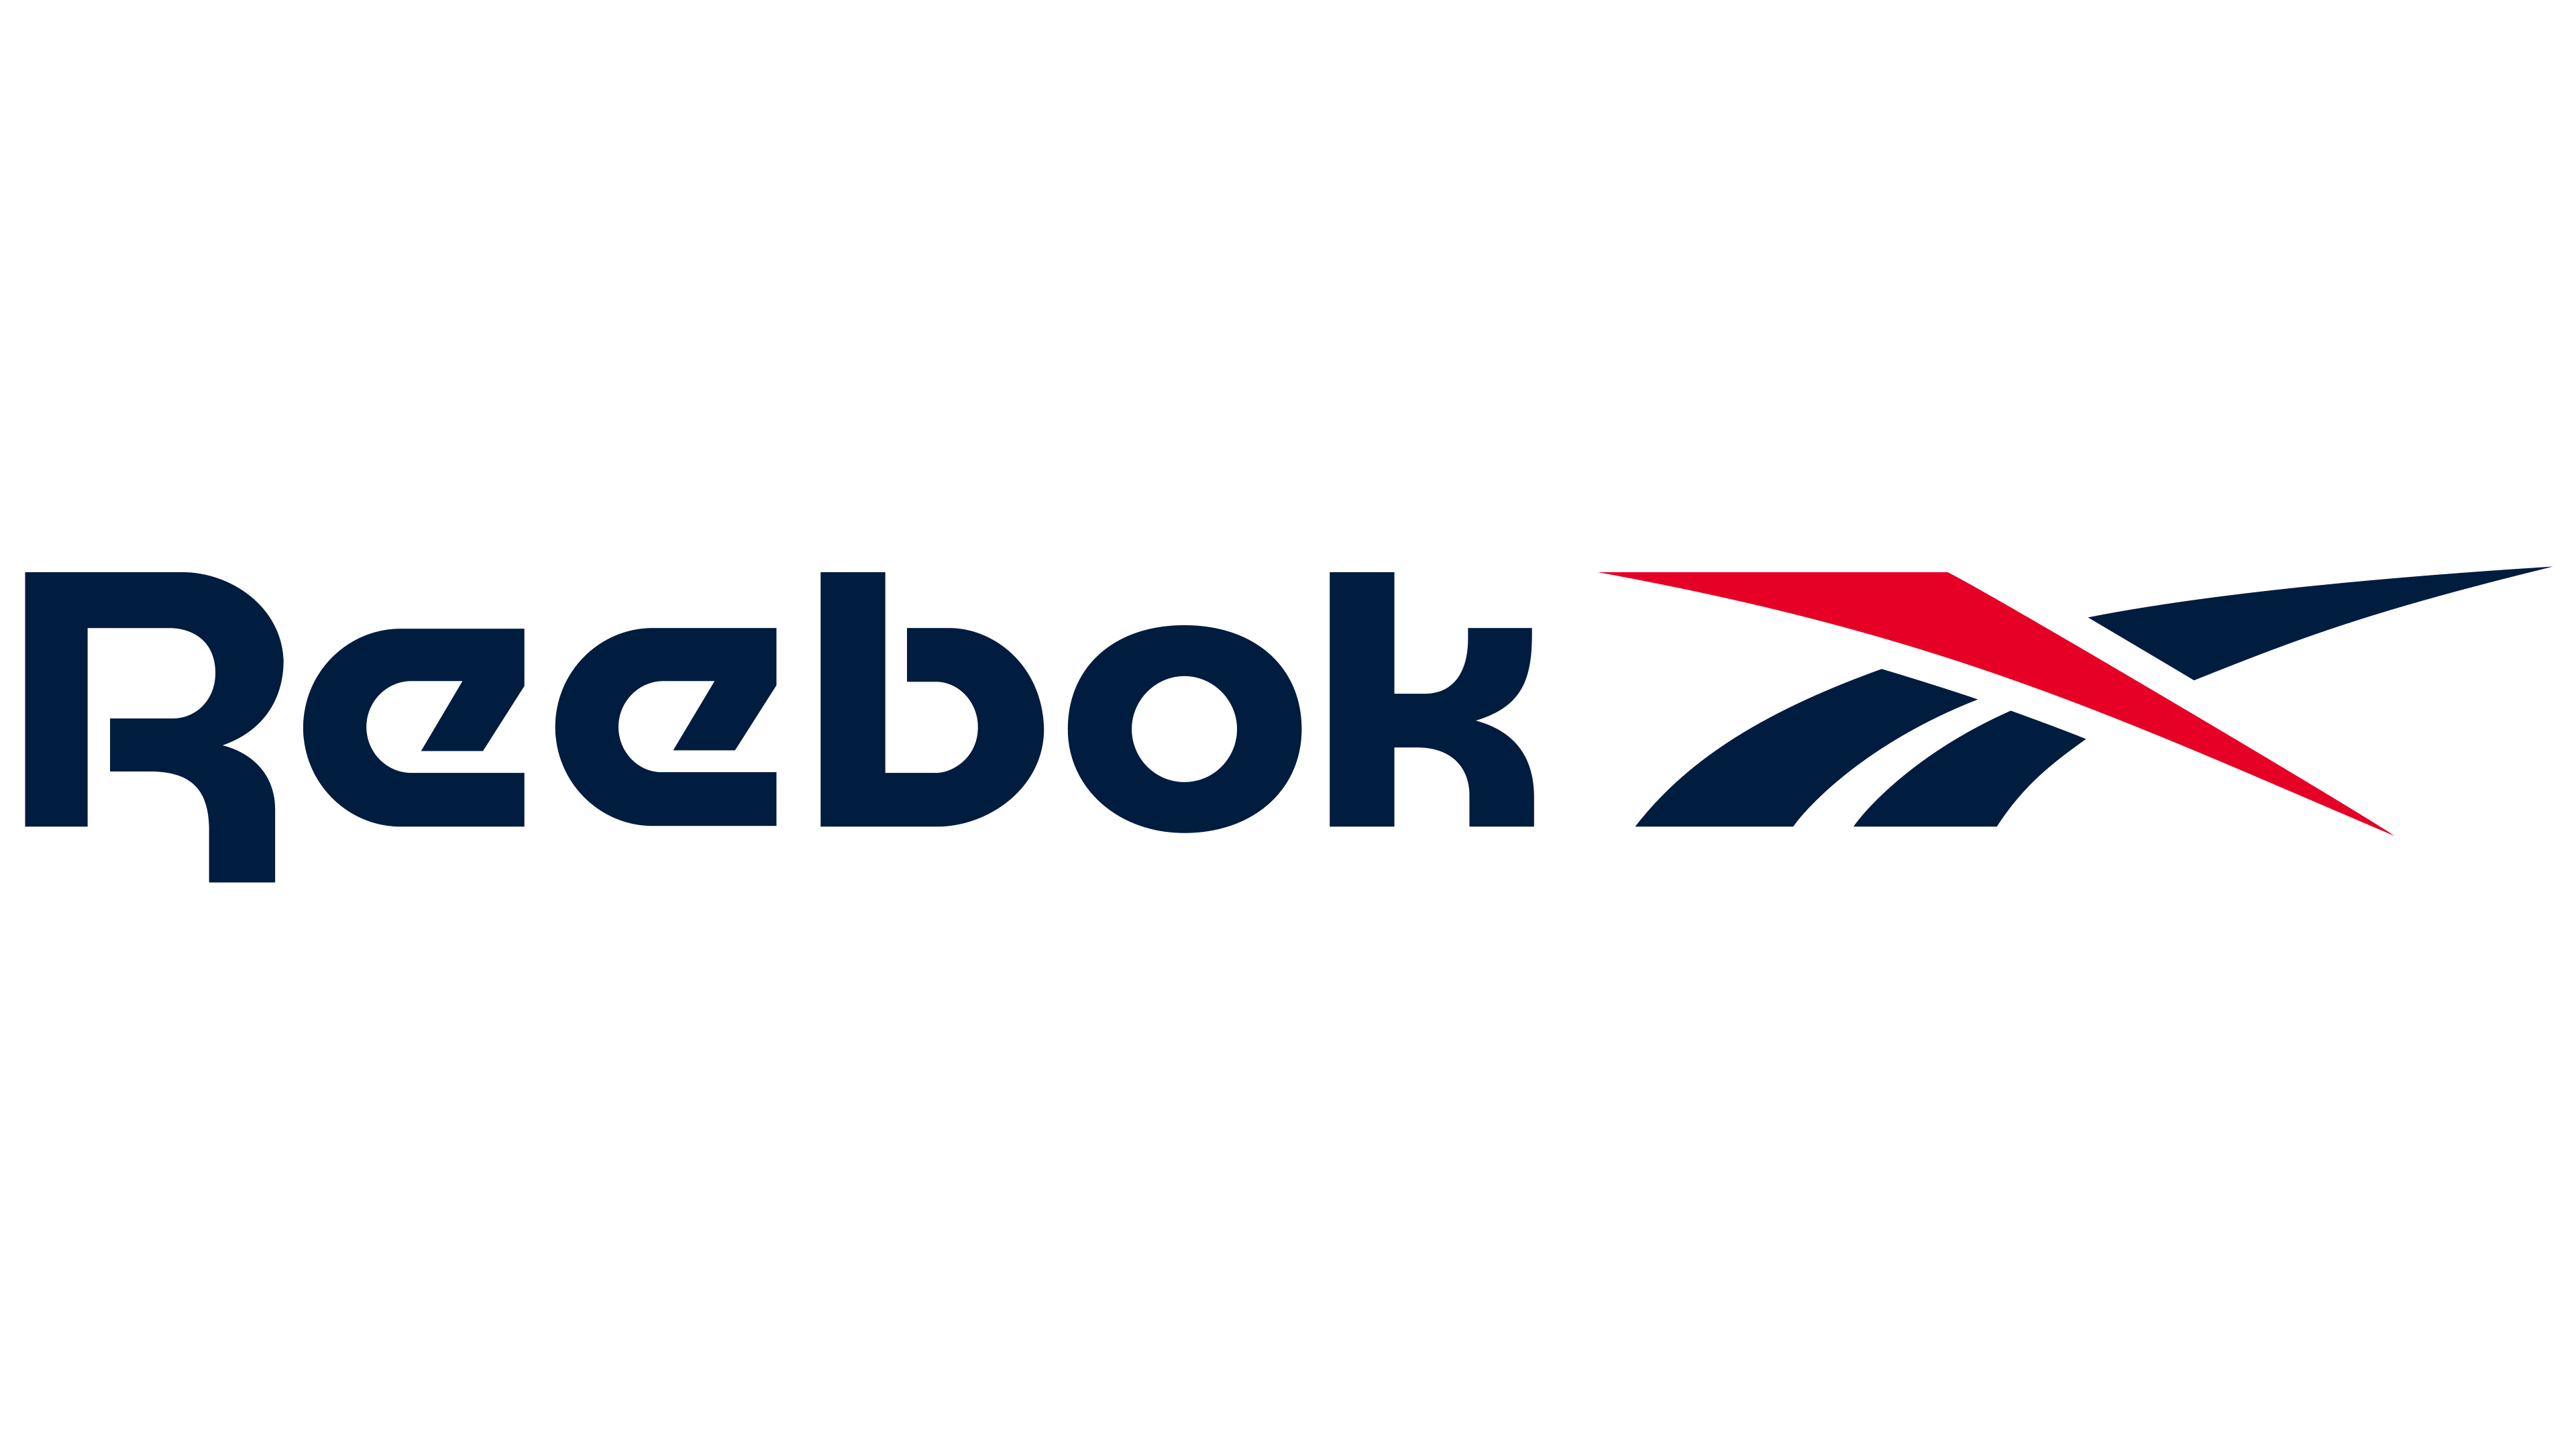 logo de la marca reebok